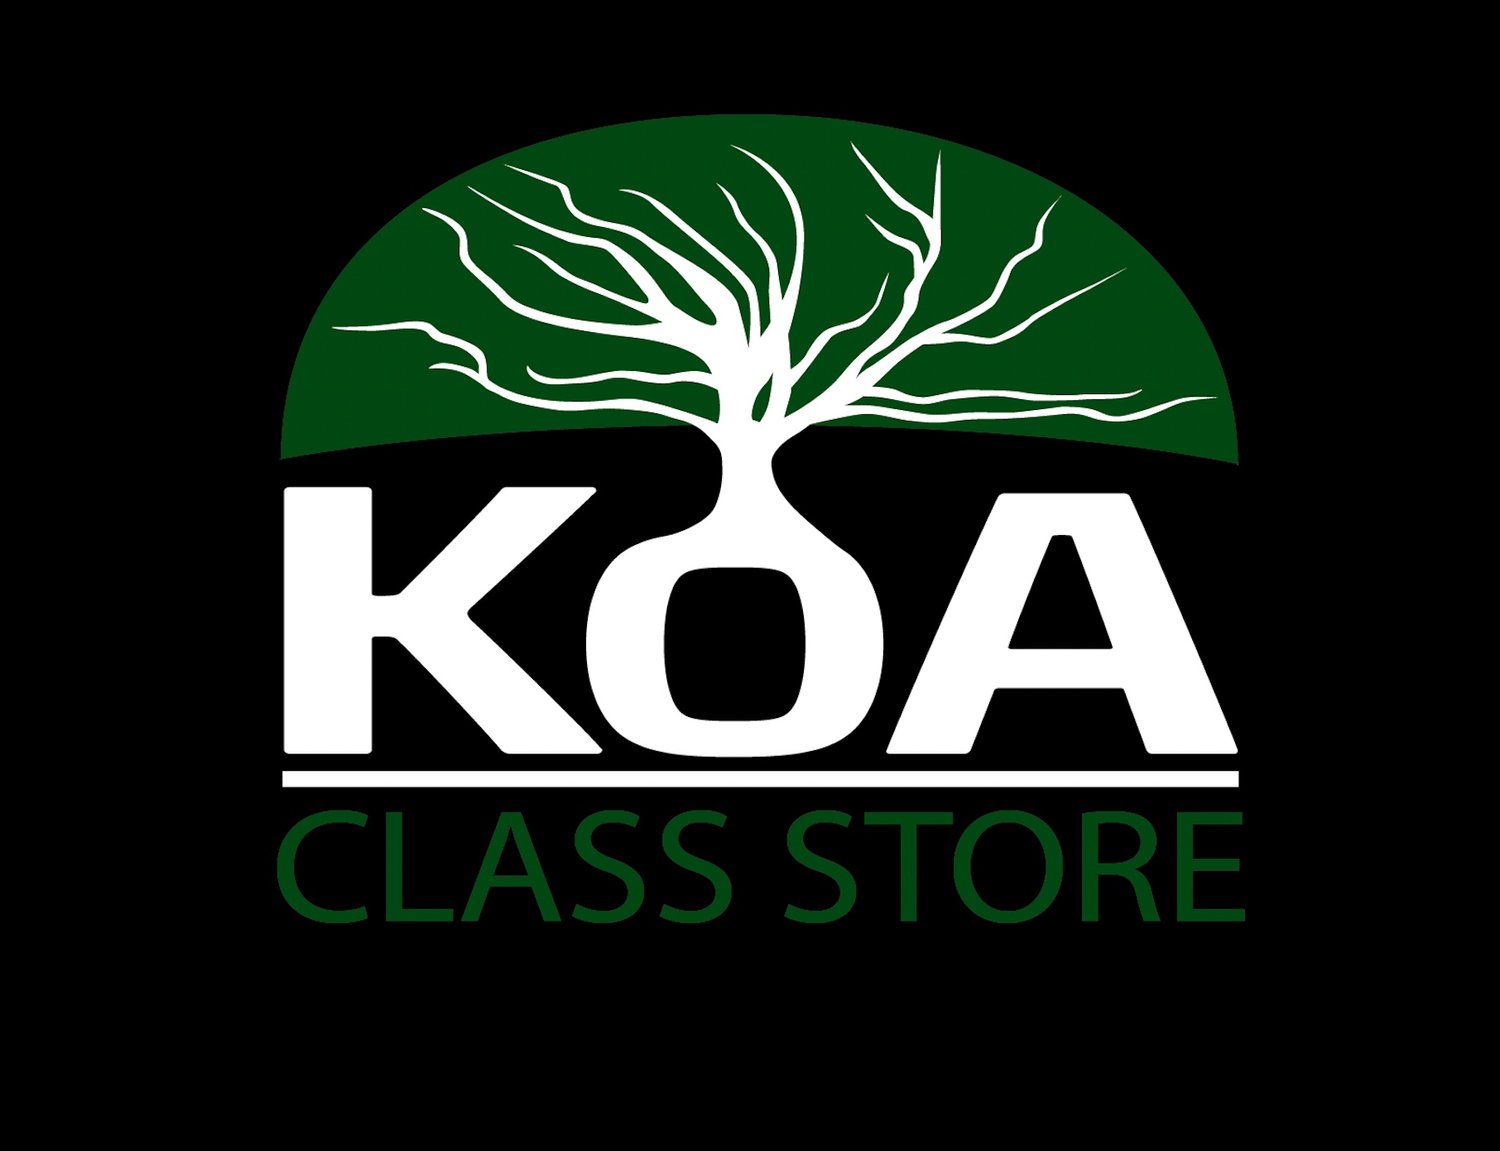 Koa Class Store